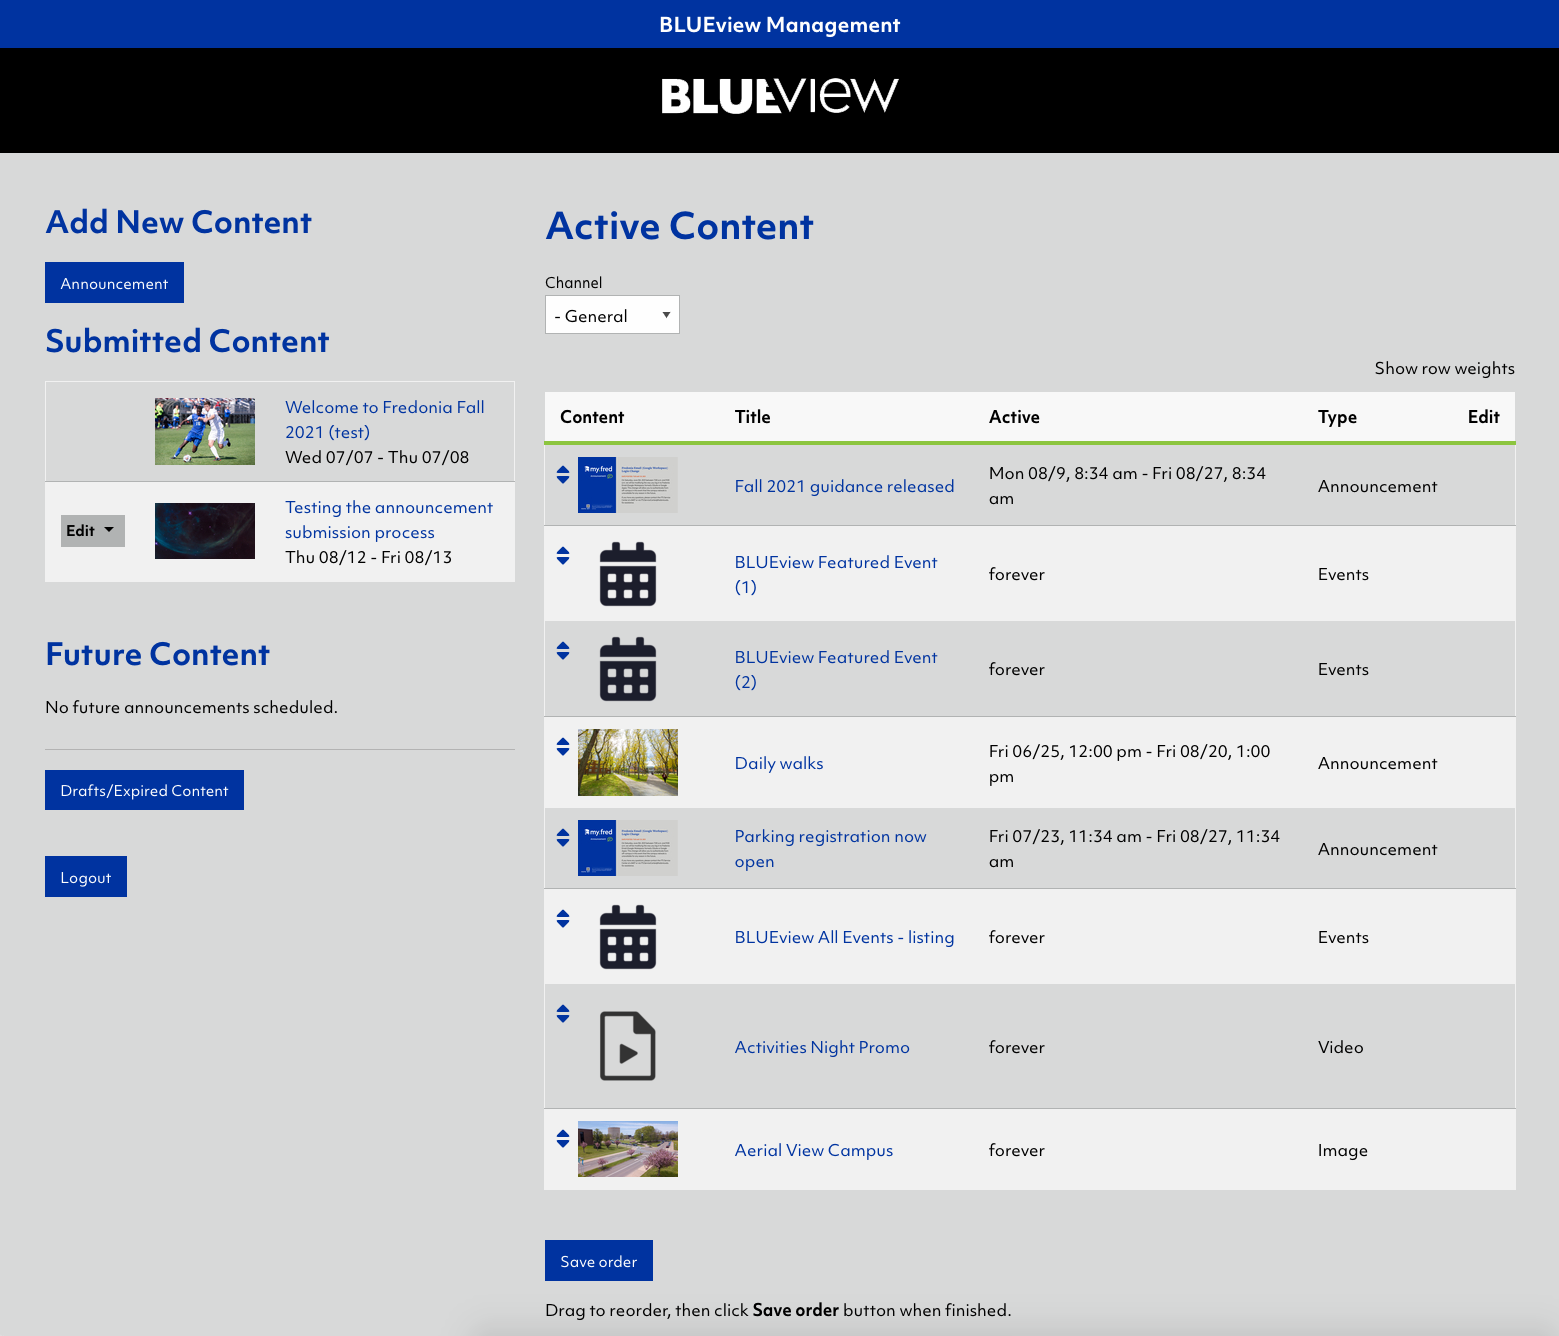 BLUEview Management Workbench